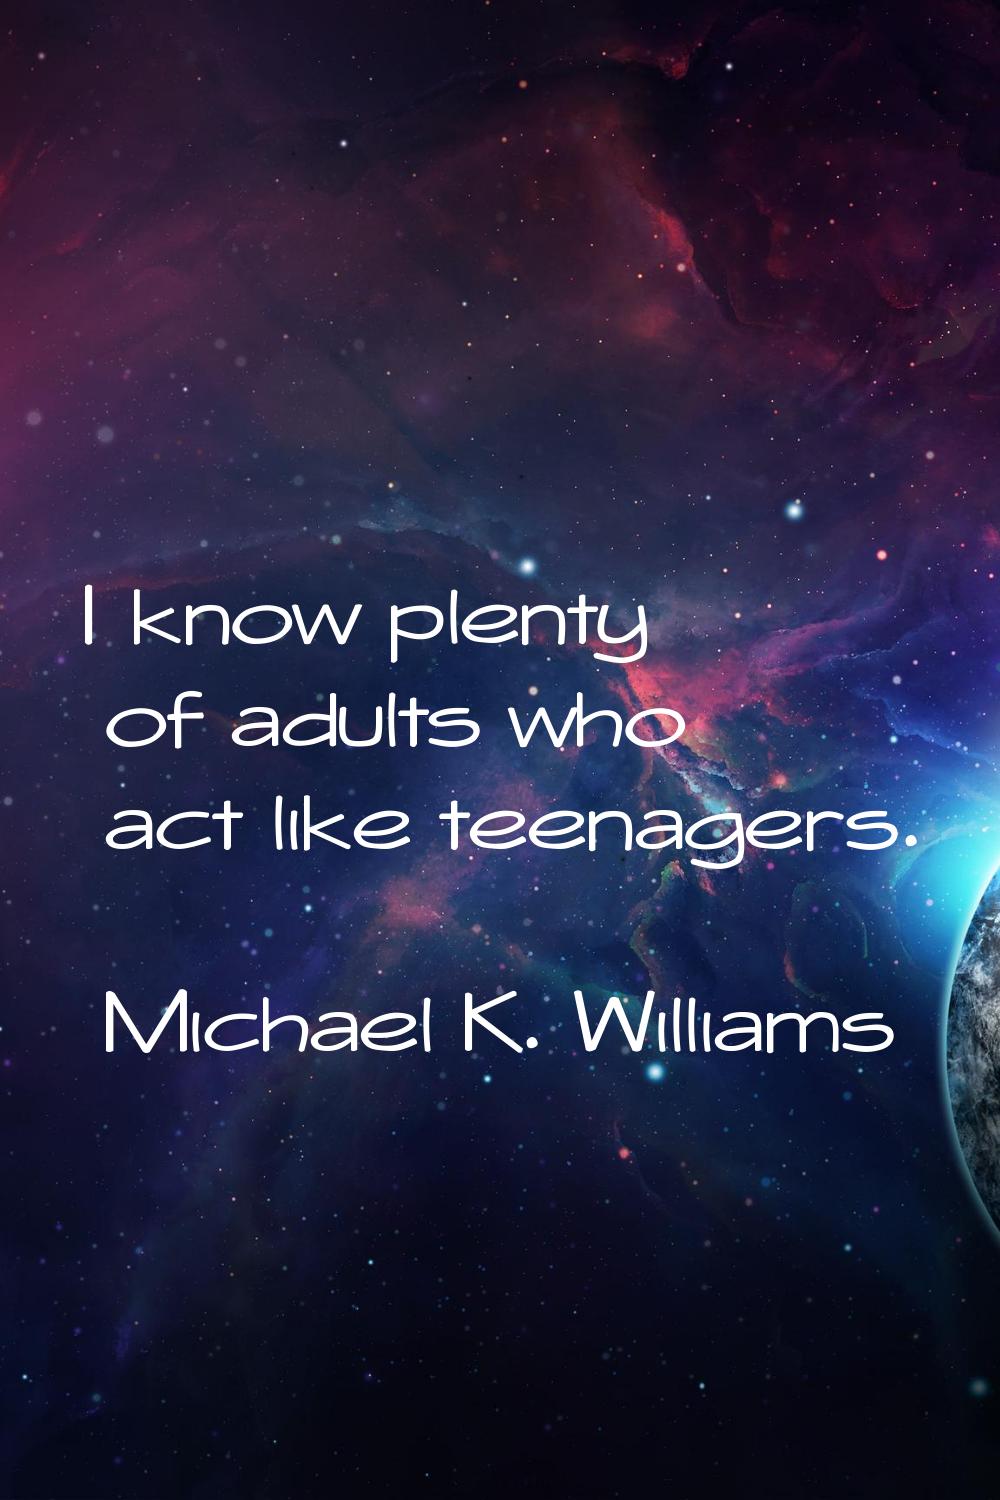 I know plenty of adults who act like teenagers.